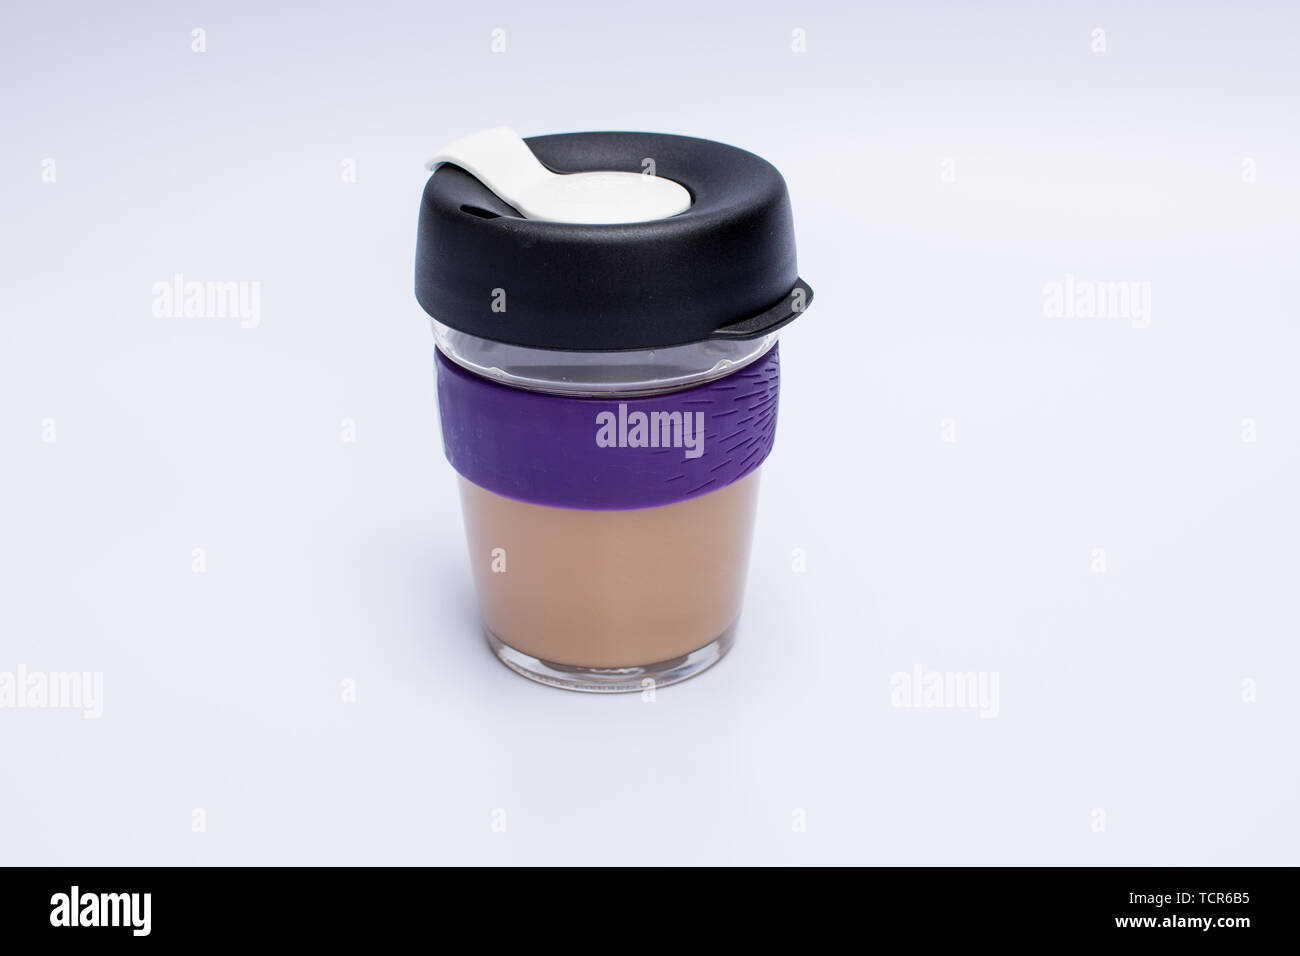 https://c8.alamy.com/comp/TCR6B5/reusable-glass-coffee-mug-with-silicone-sleeve-and-plastic-lid-TCR6B5.jpg